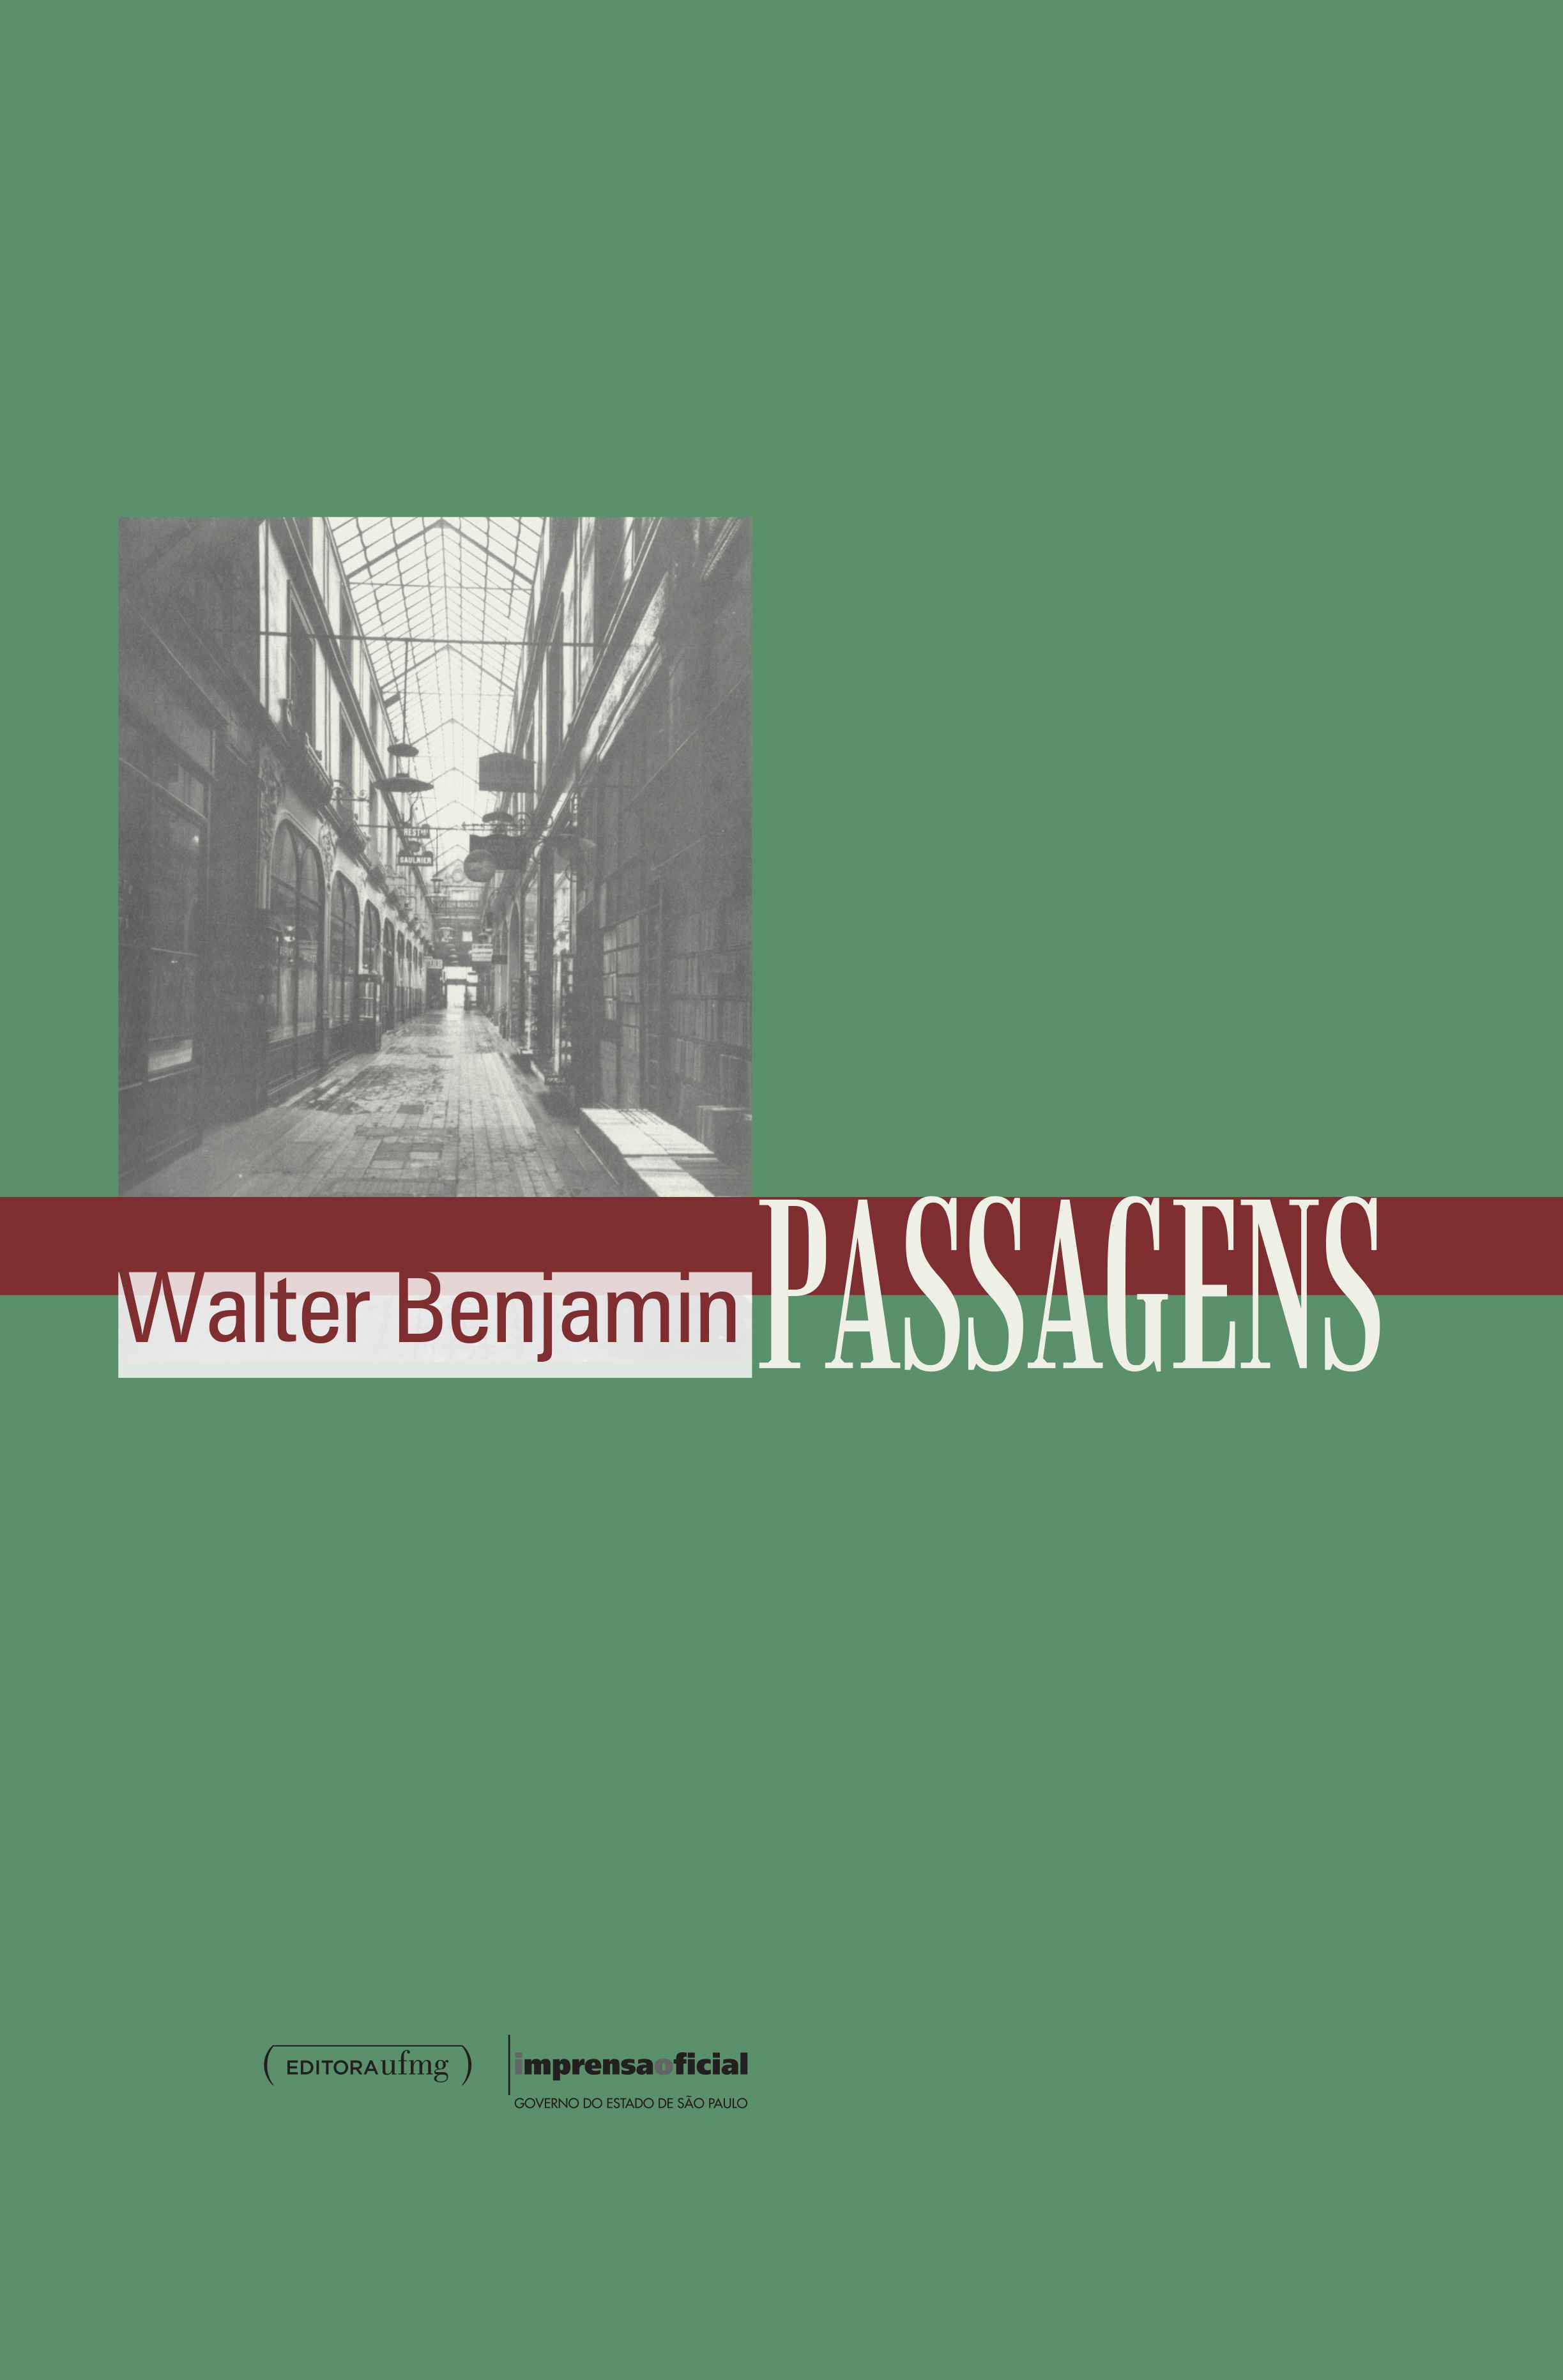 Obra de Walter Benjamin incorpora recursos poéticos mesmo tratando de análises historiográficas